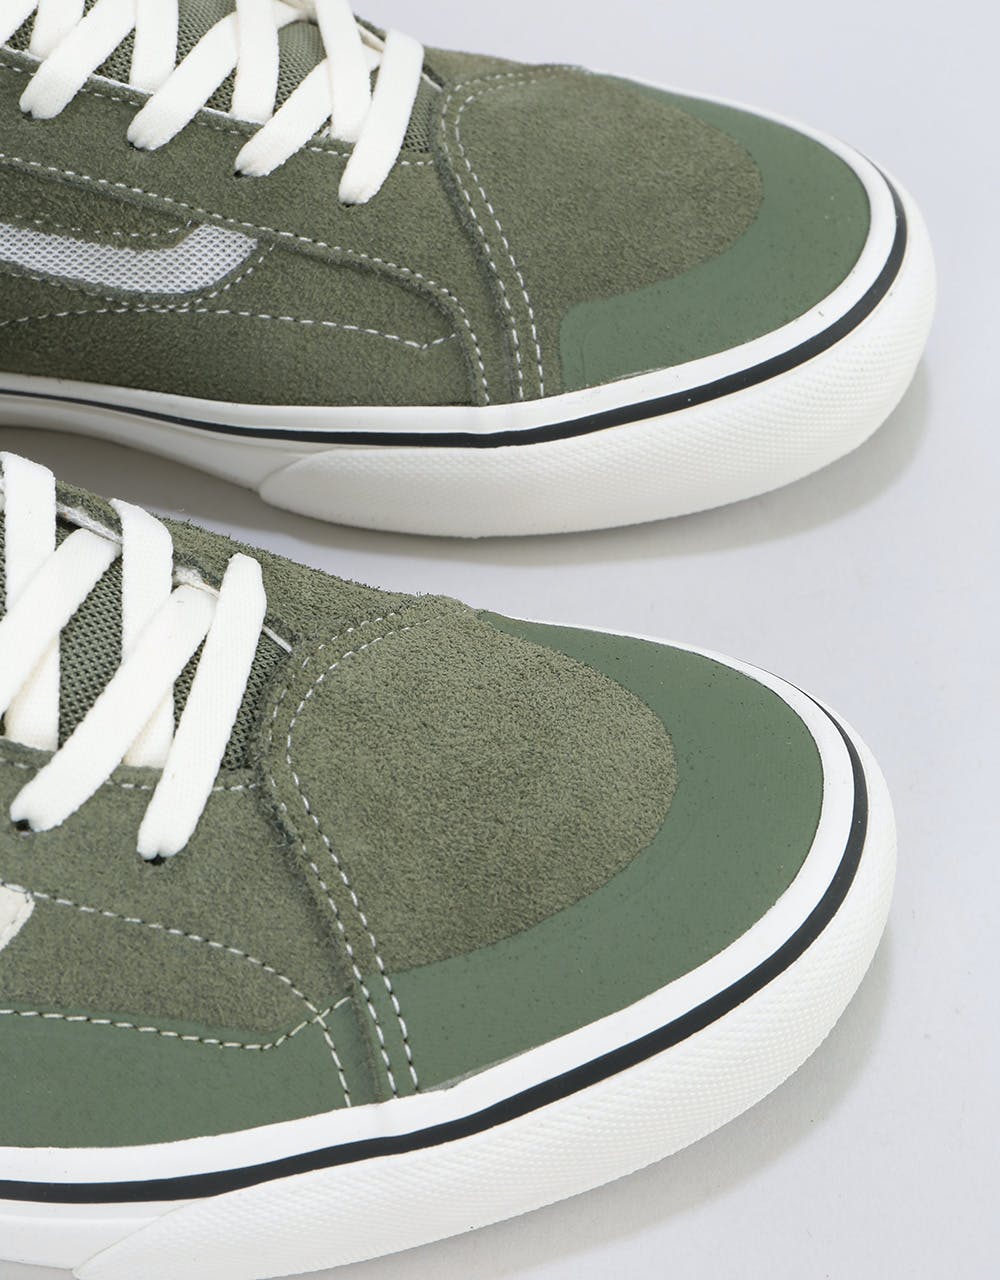 Vans TNT Advanced Prototype Skate Shoes - Green/Marshmallow